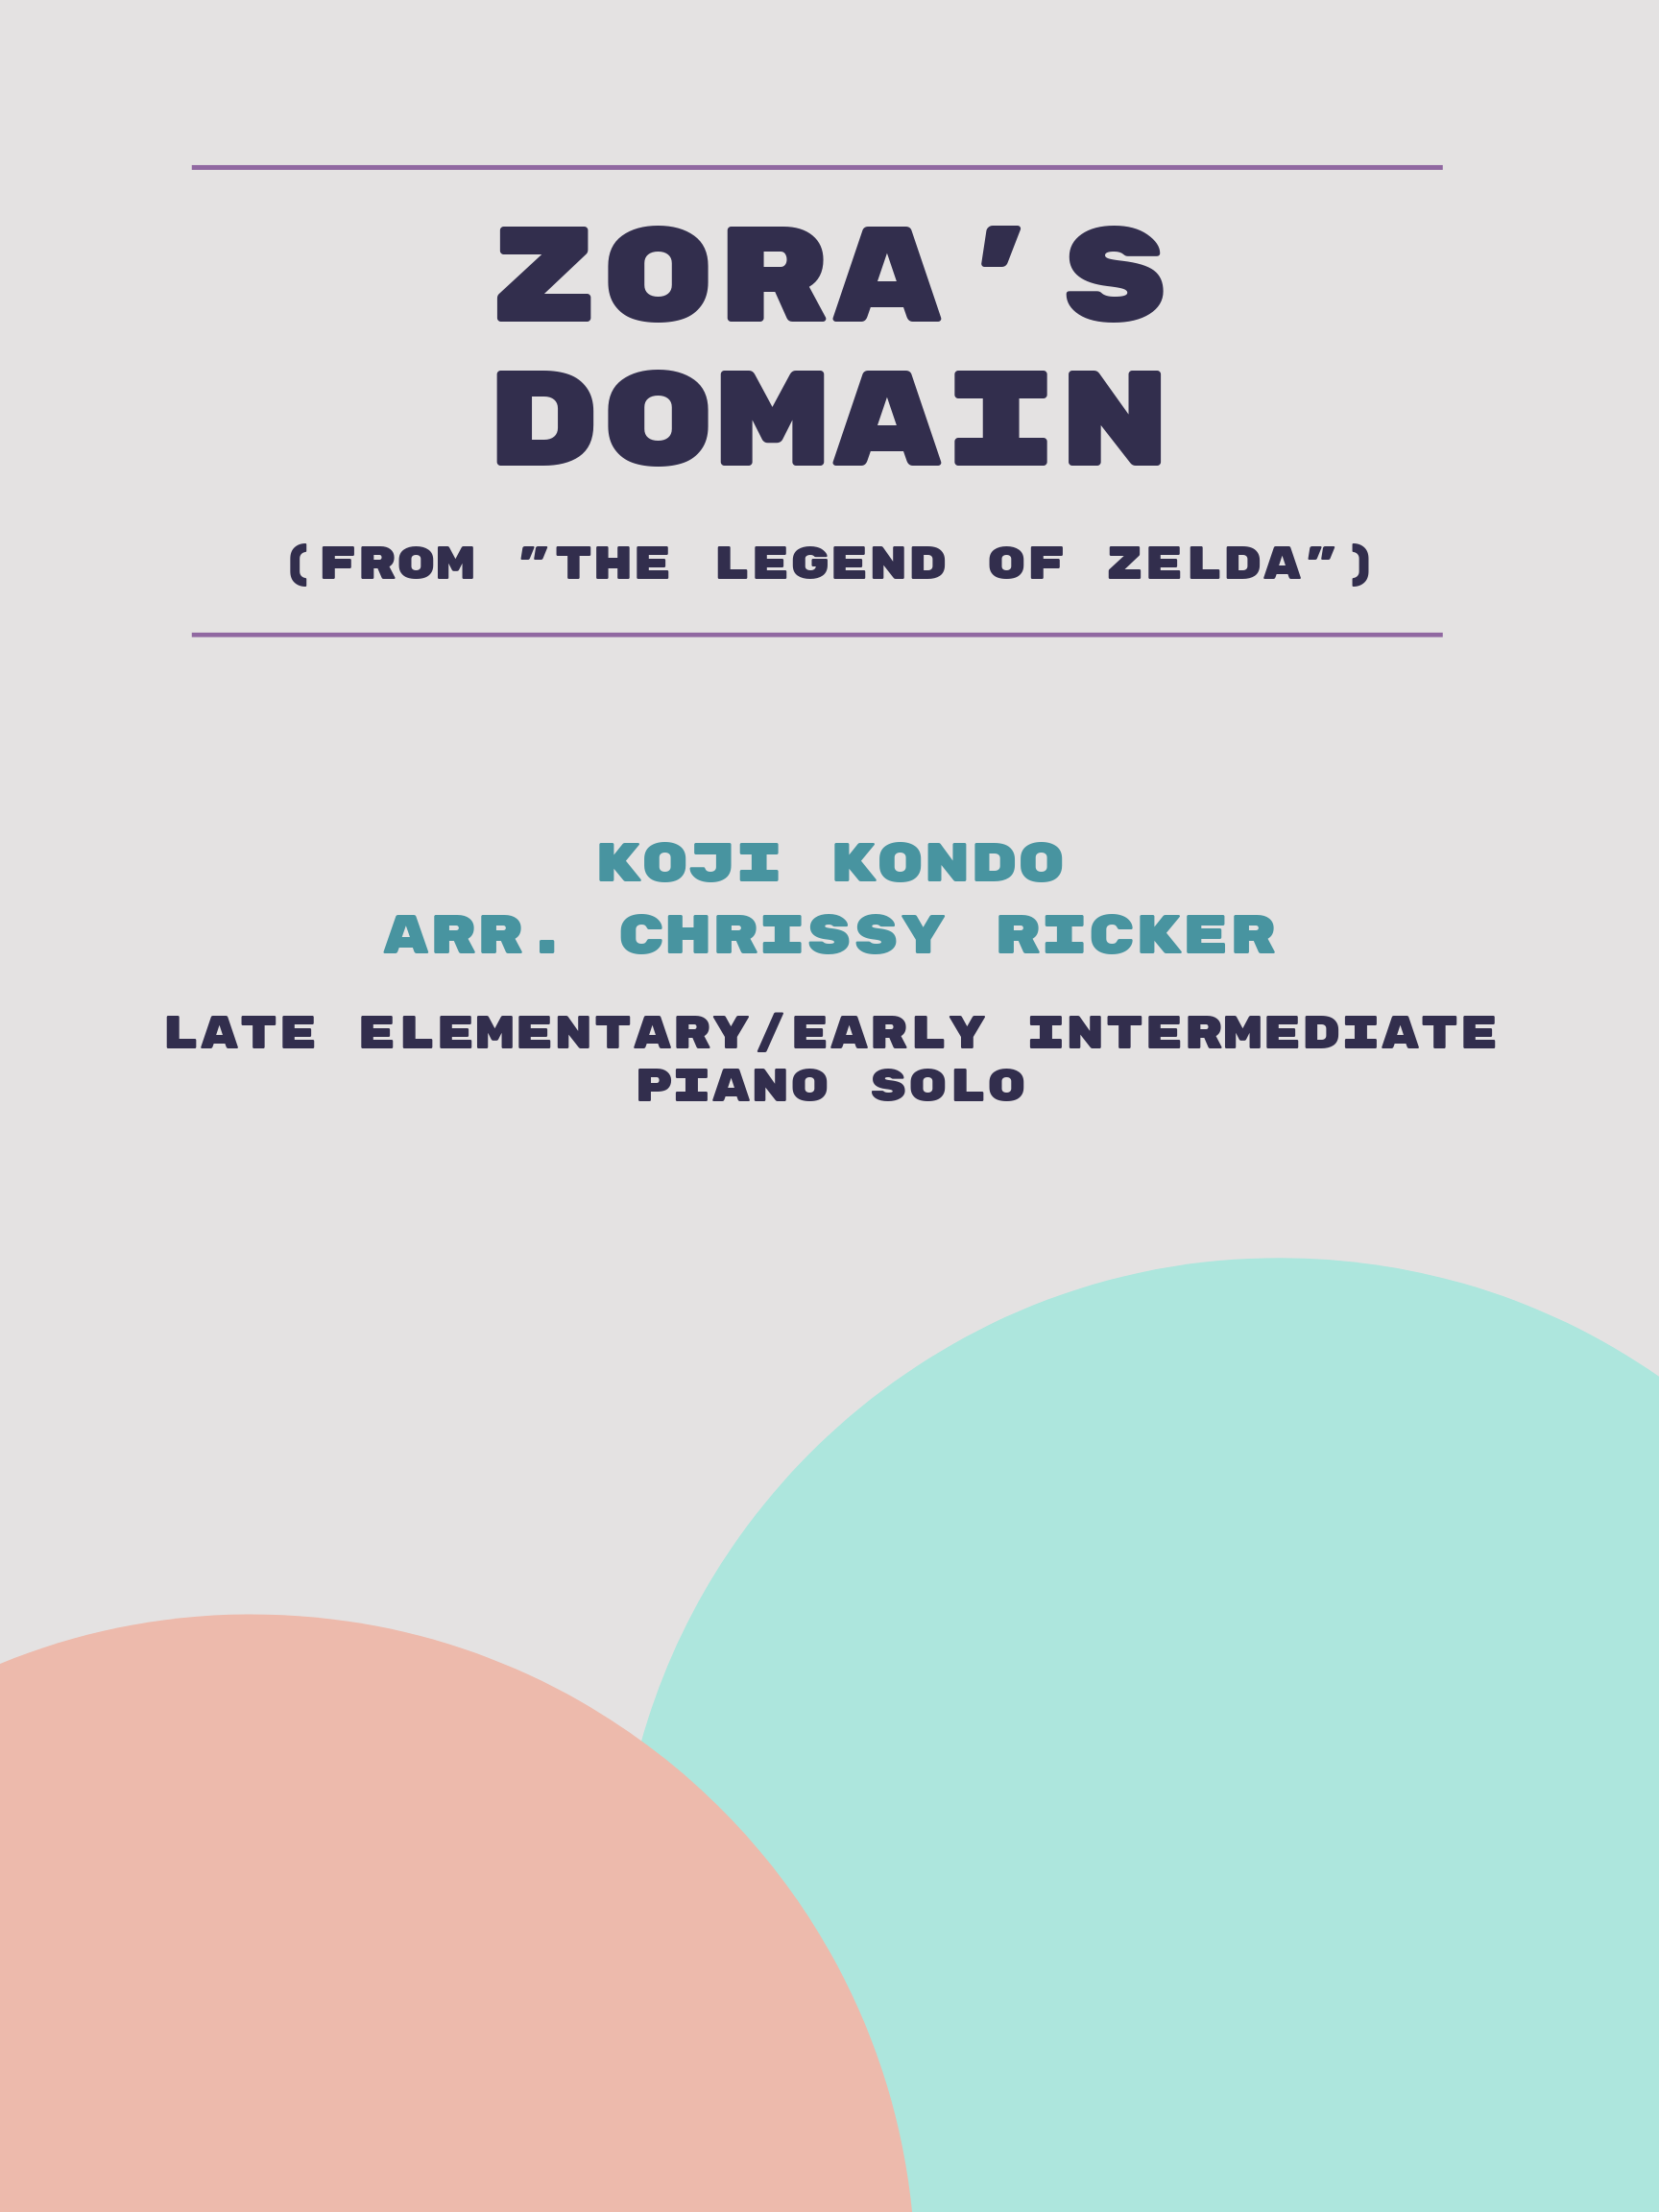 Zora's Domain by Koji Kondo